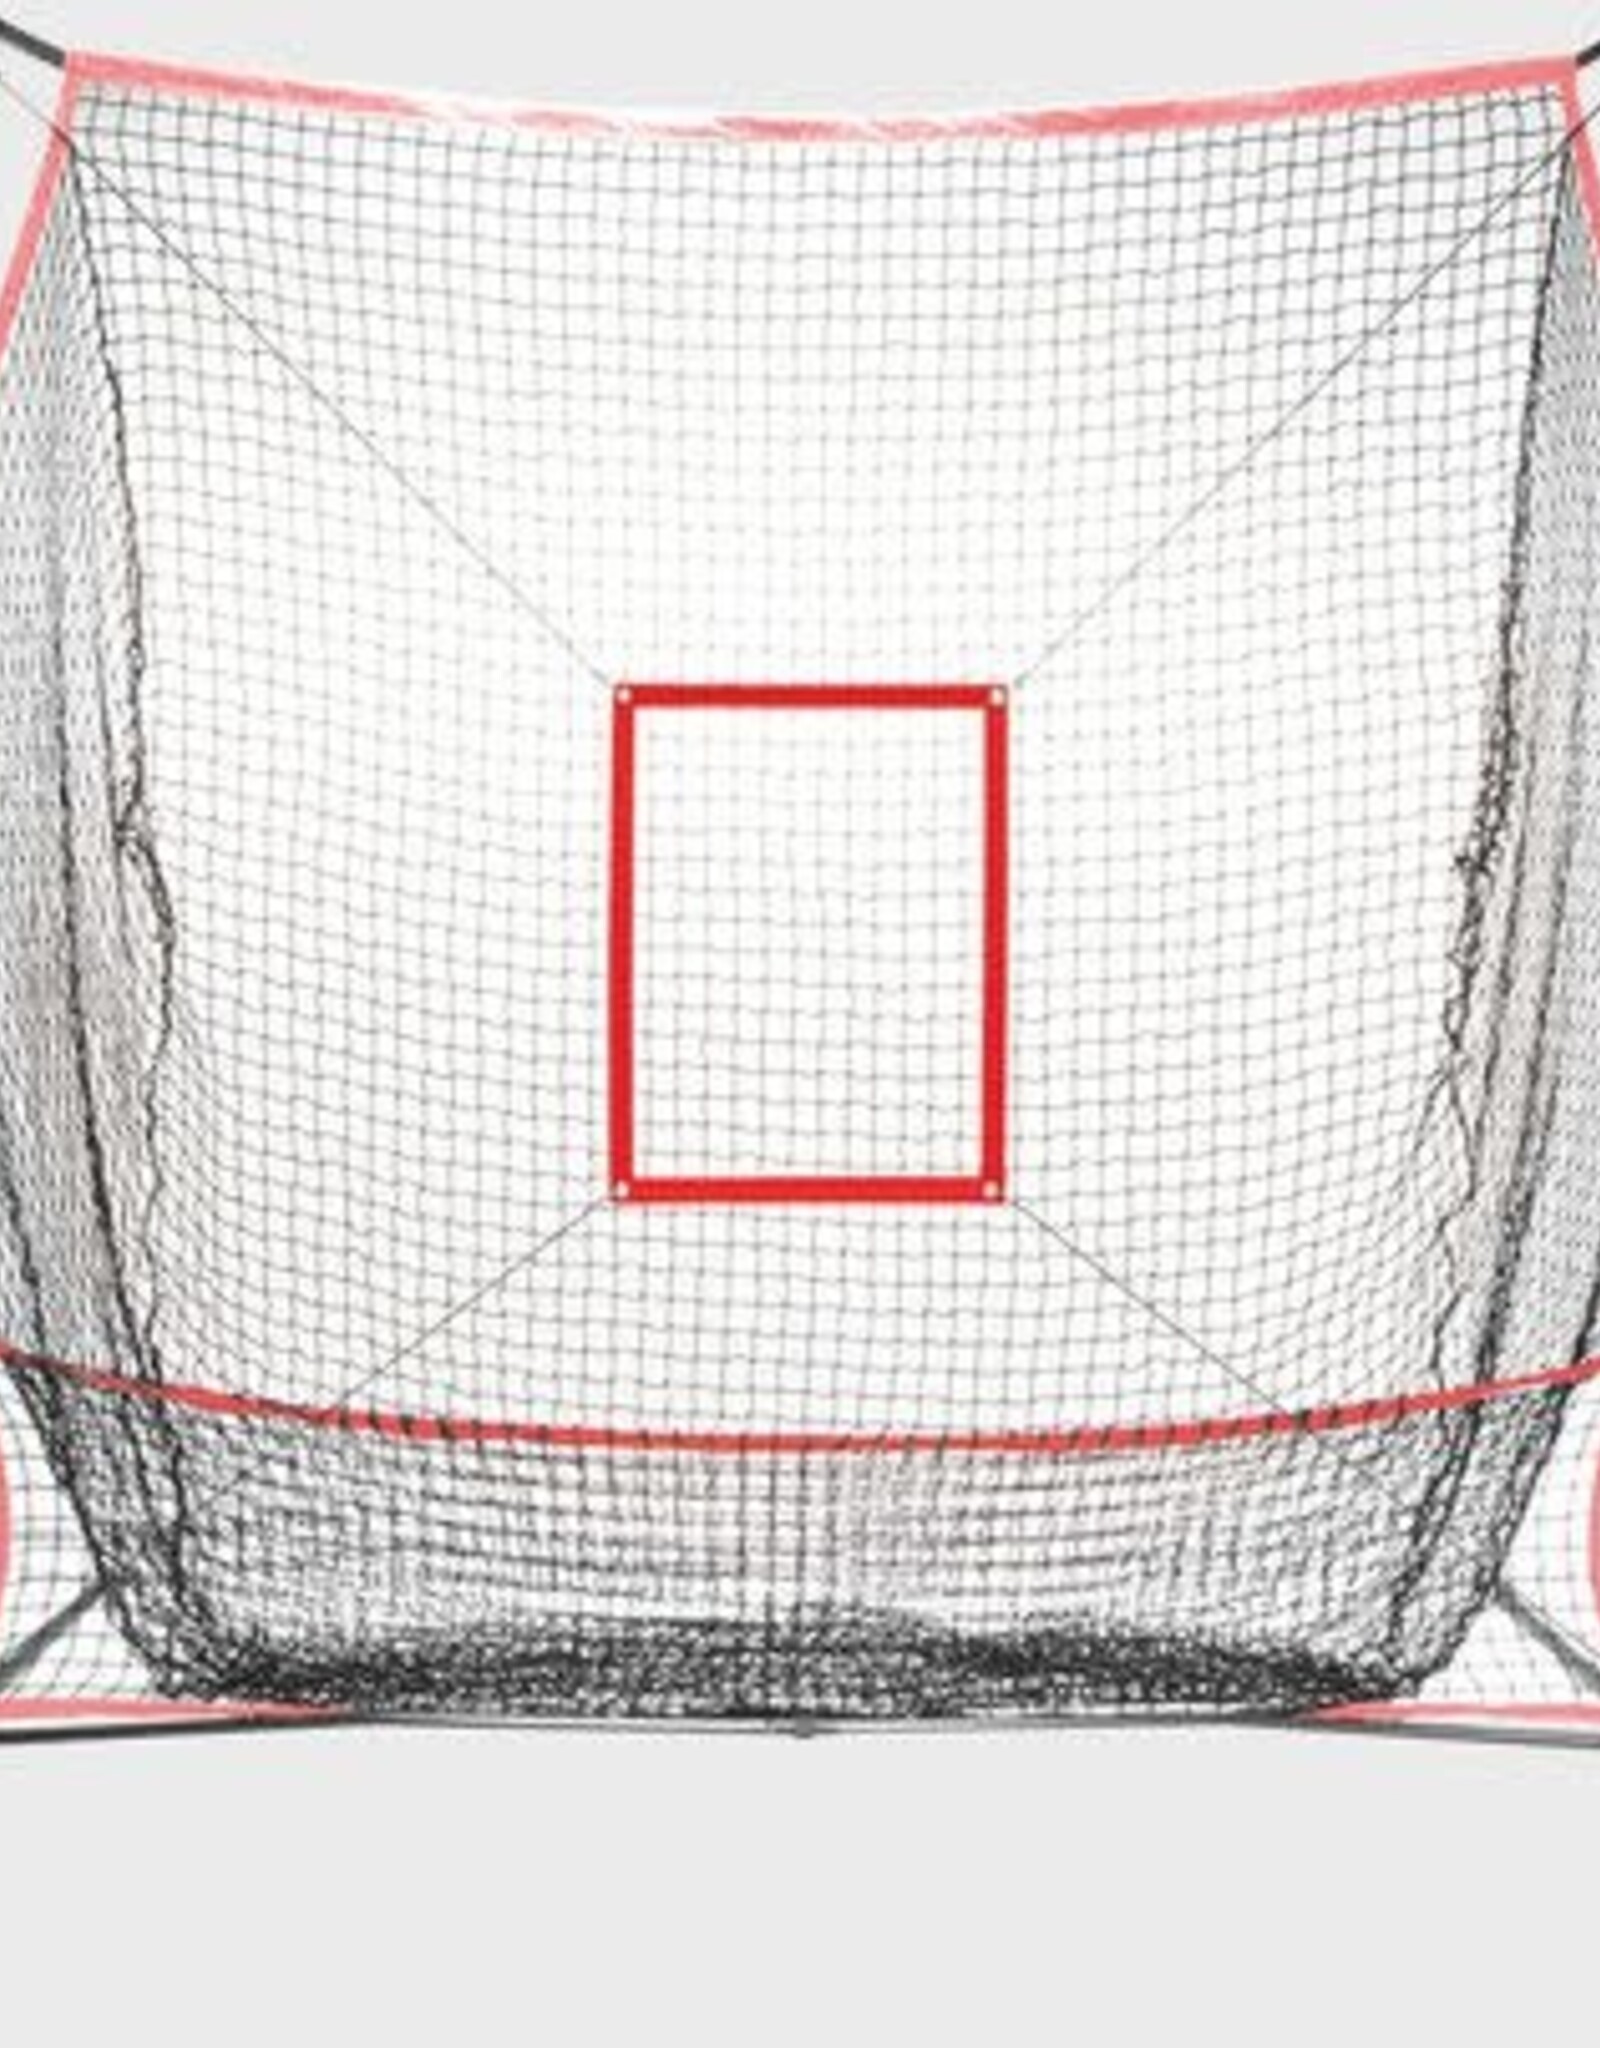 Rawlings Rawlings Pro-Style Practice Net (7 ft)